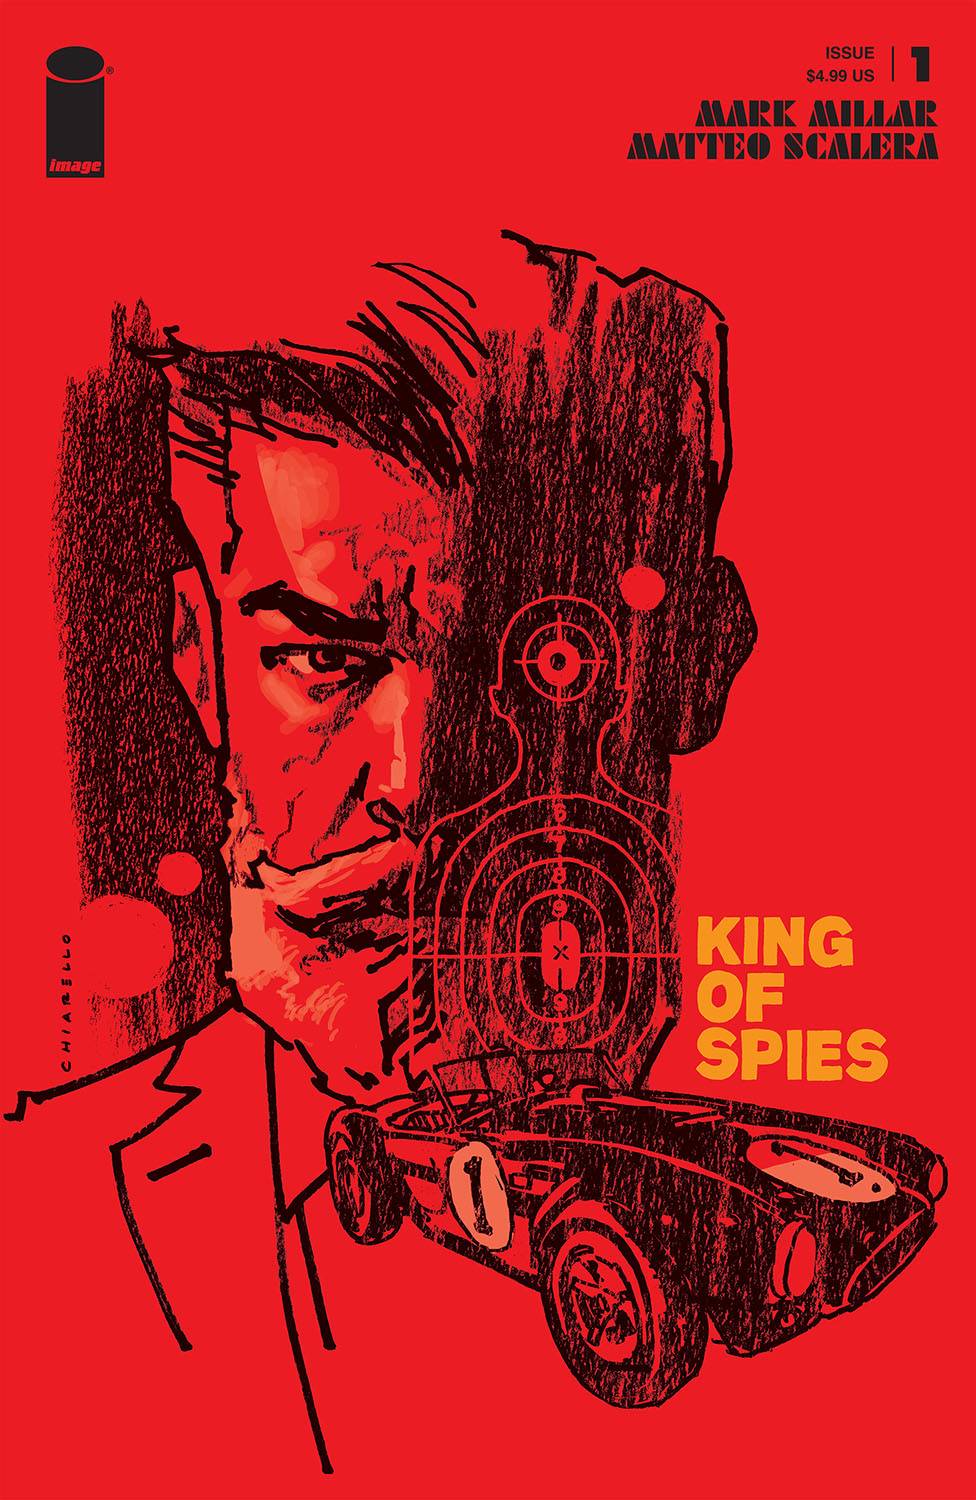 KING OF SPIES #1 (OF 4) CVR C CHIARELLO (MR)